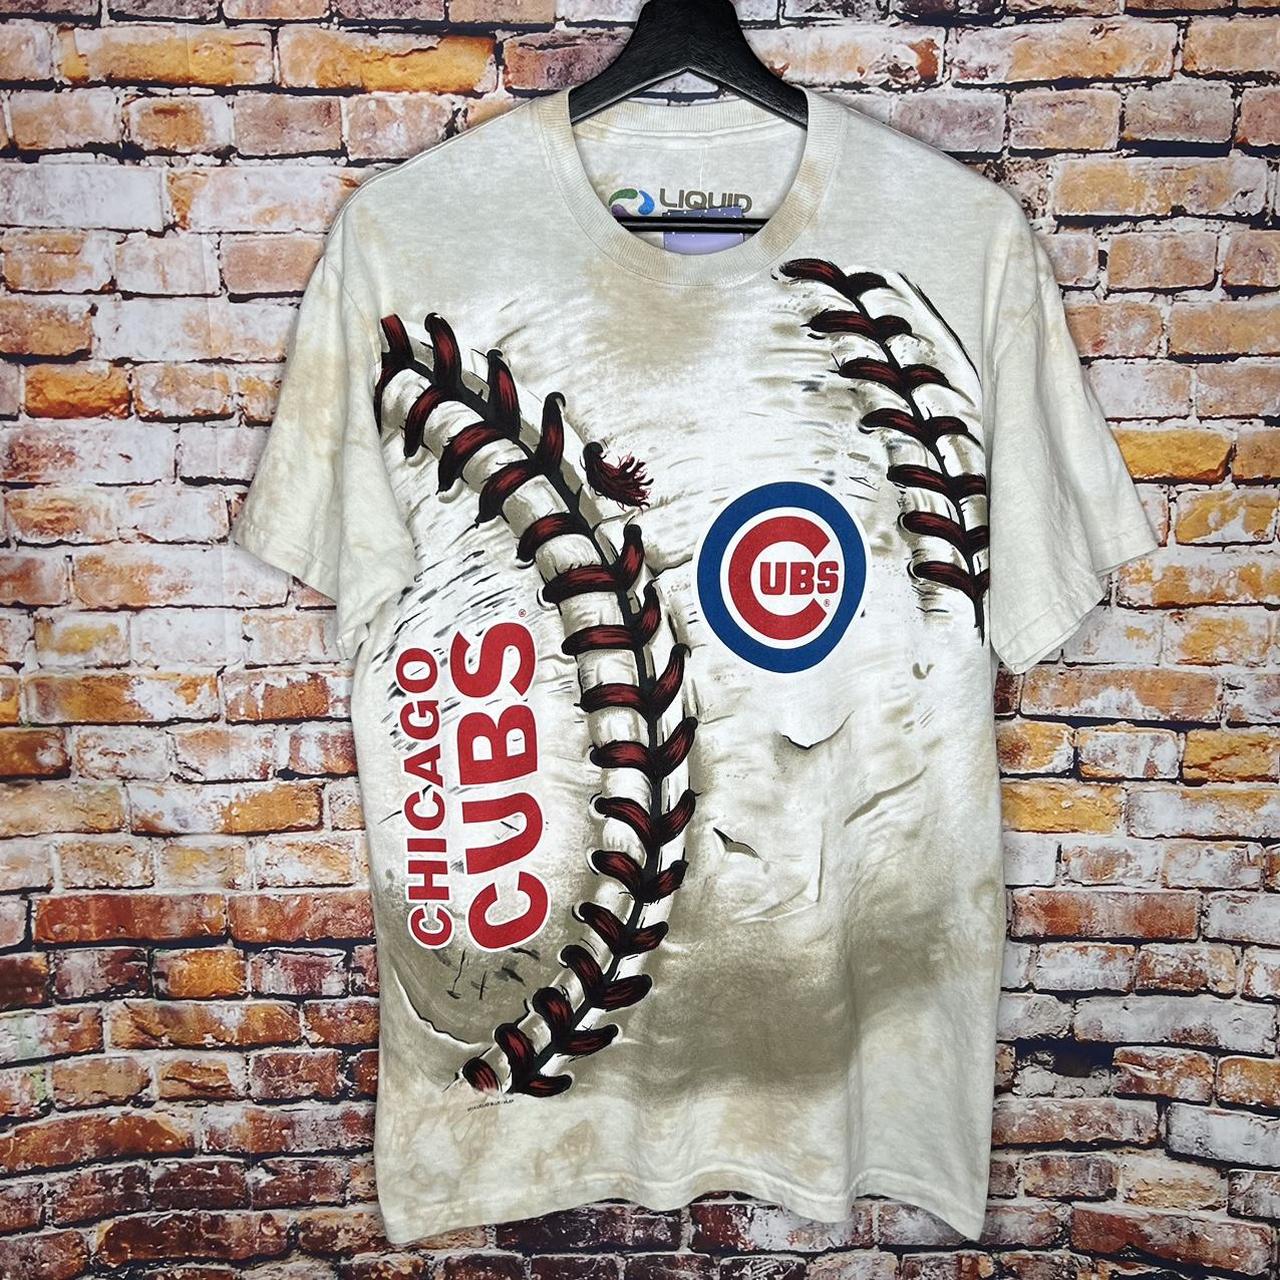 Multi-Color Chicago Cubs MLB Jerseys for sale